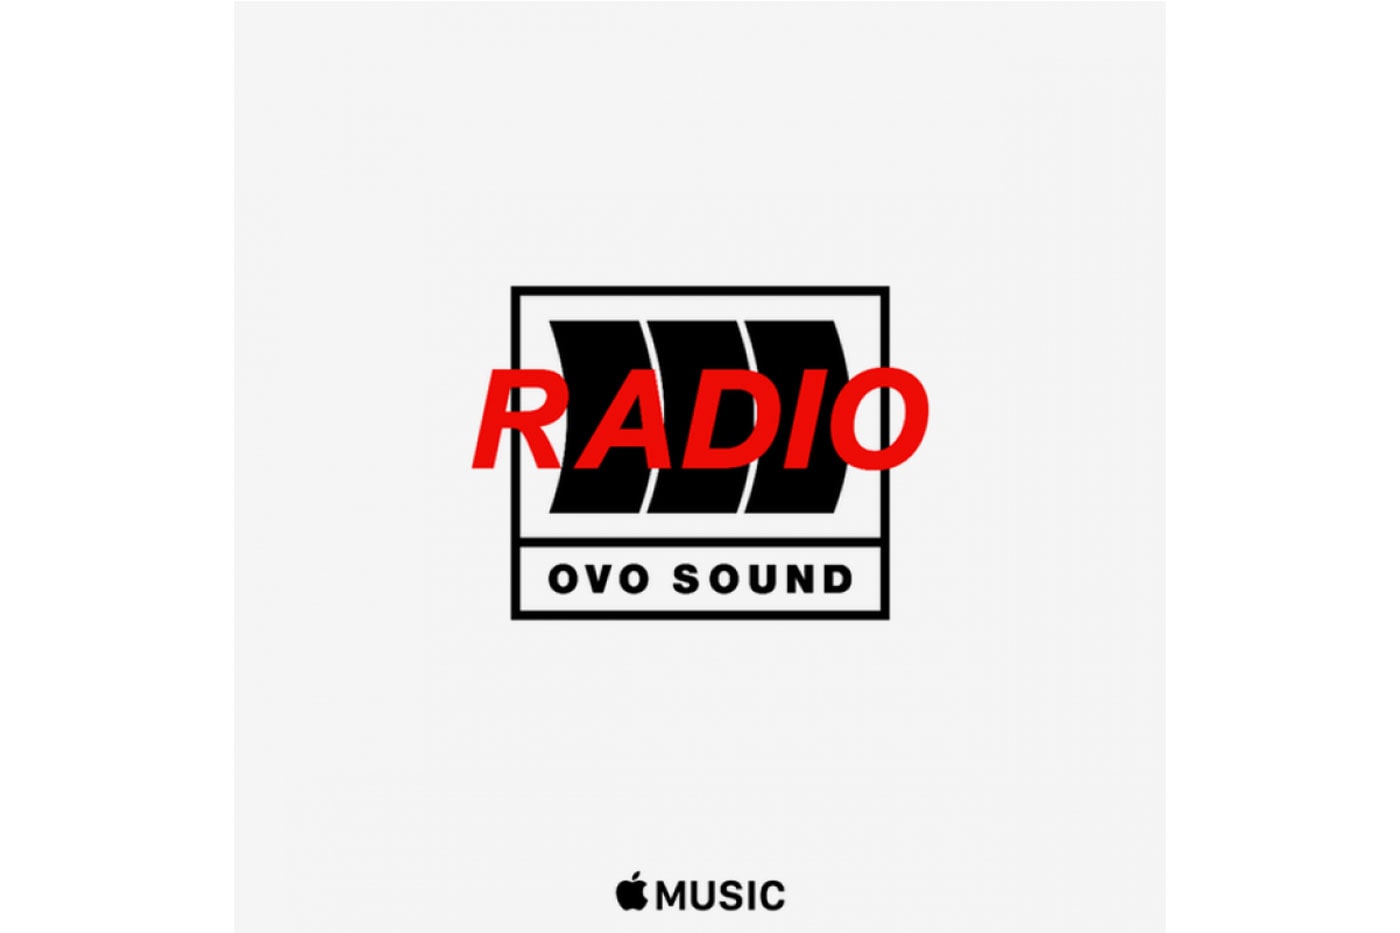 Listen to Episode Four of OVO Sound Radio